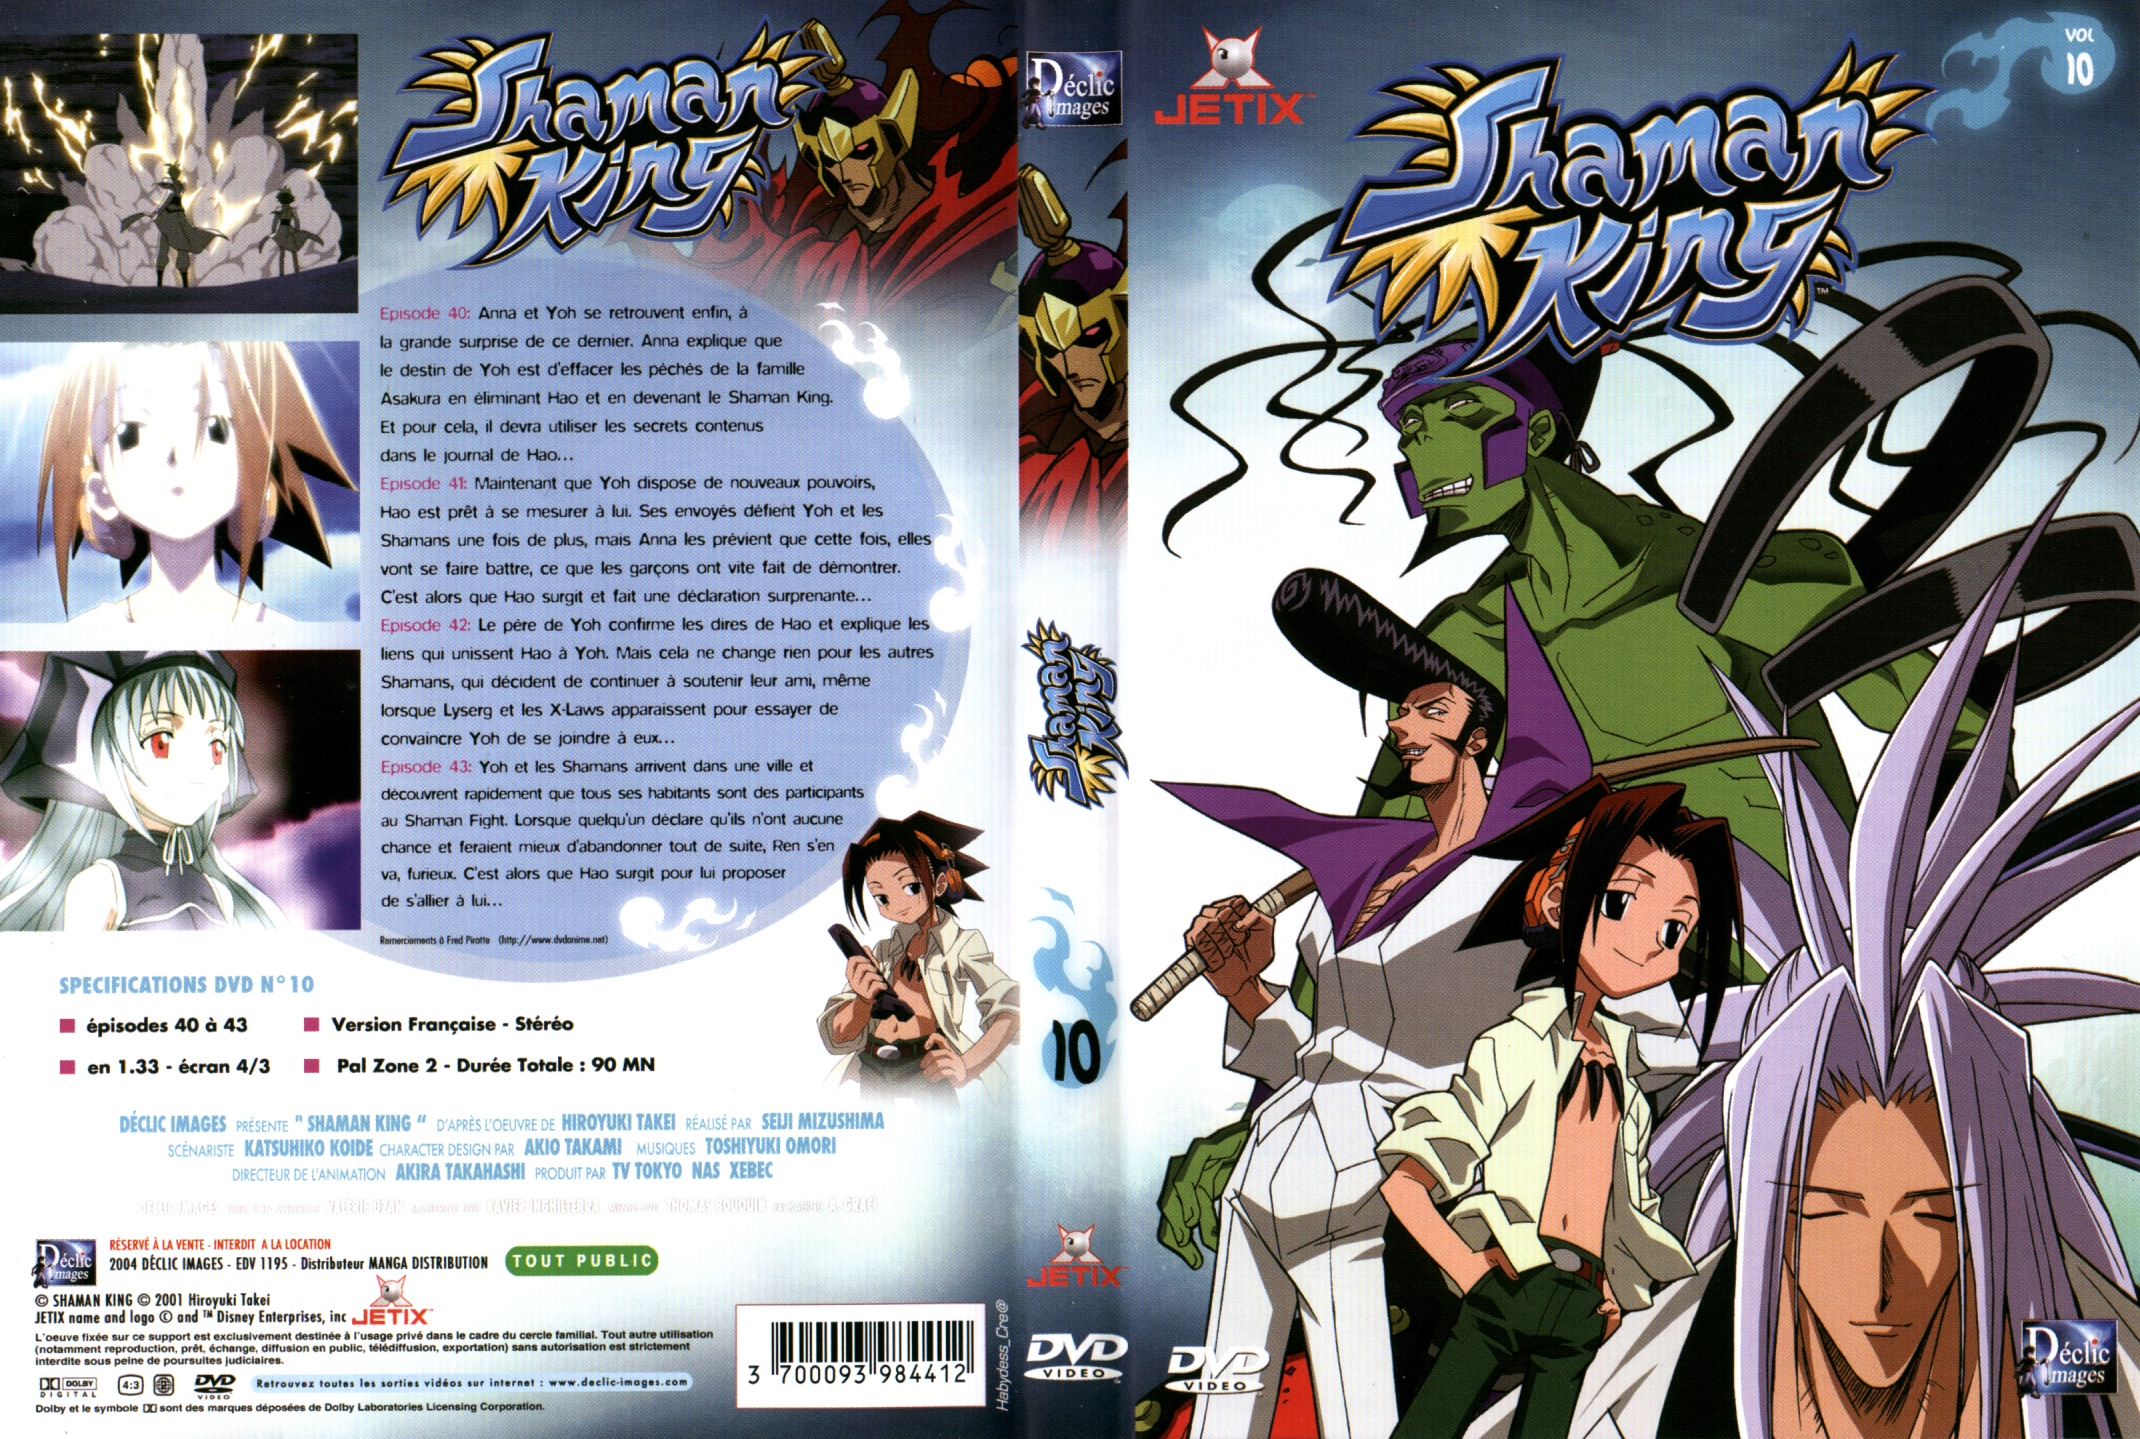 Jaquette DVD Shaman King vol 10